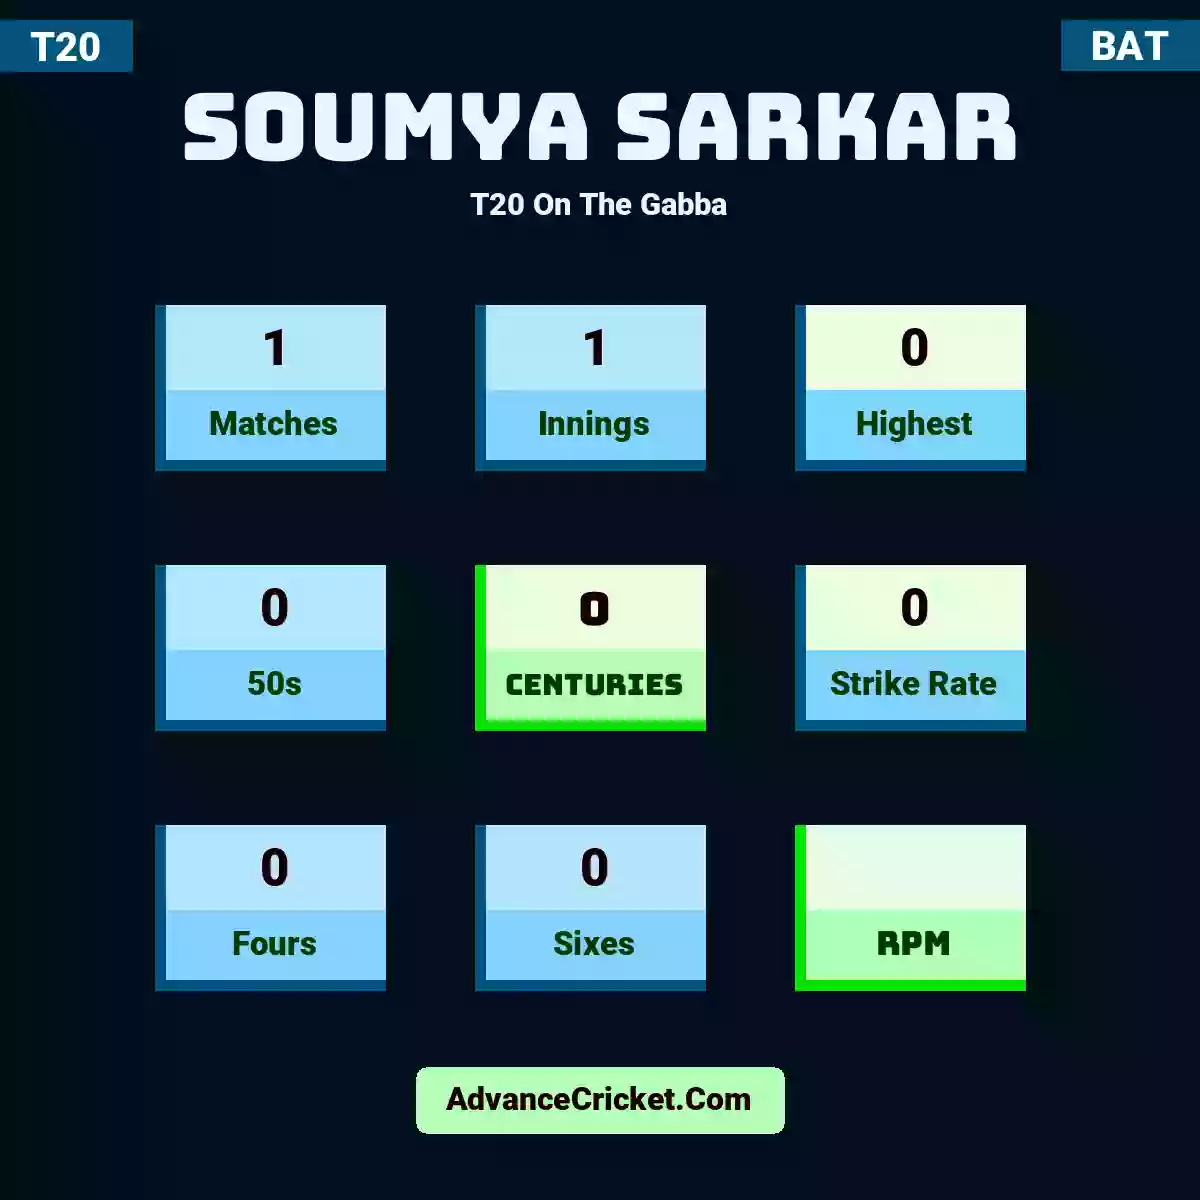 Soumya Sarkar T20  On The Gabba, Soumya Sarkar played 1 matches, scored 0 runs as highest, 0 half-centuries, and 0 centuries, with a strike rate of 0. S.Sarkar hit 0 fours and 0 sixes.